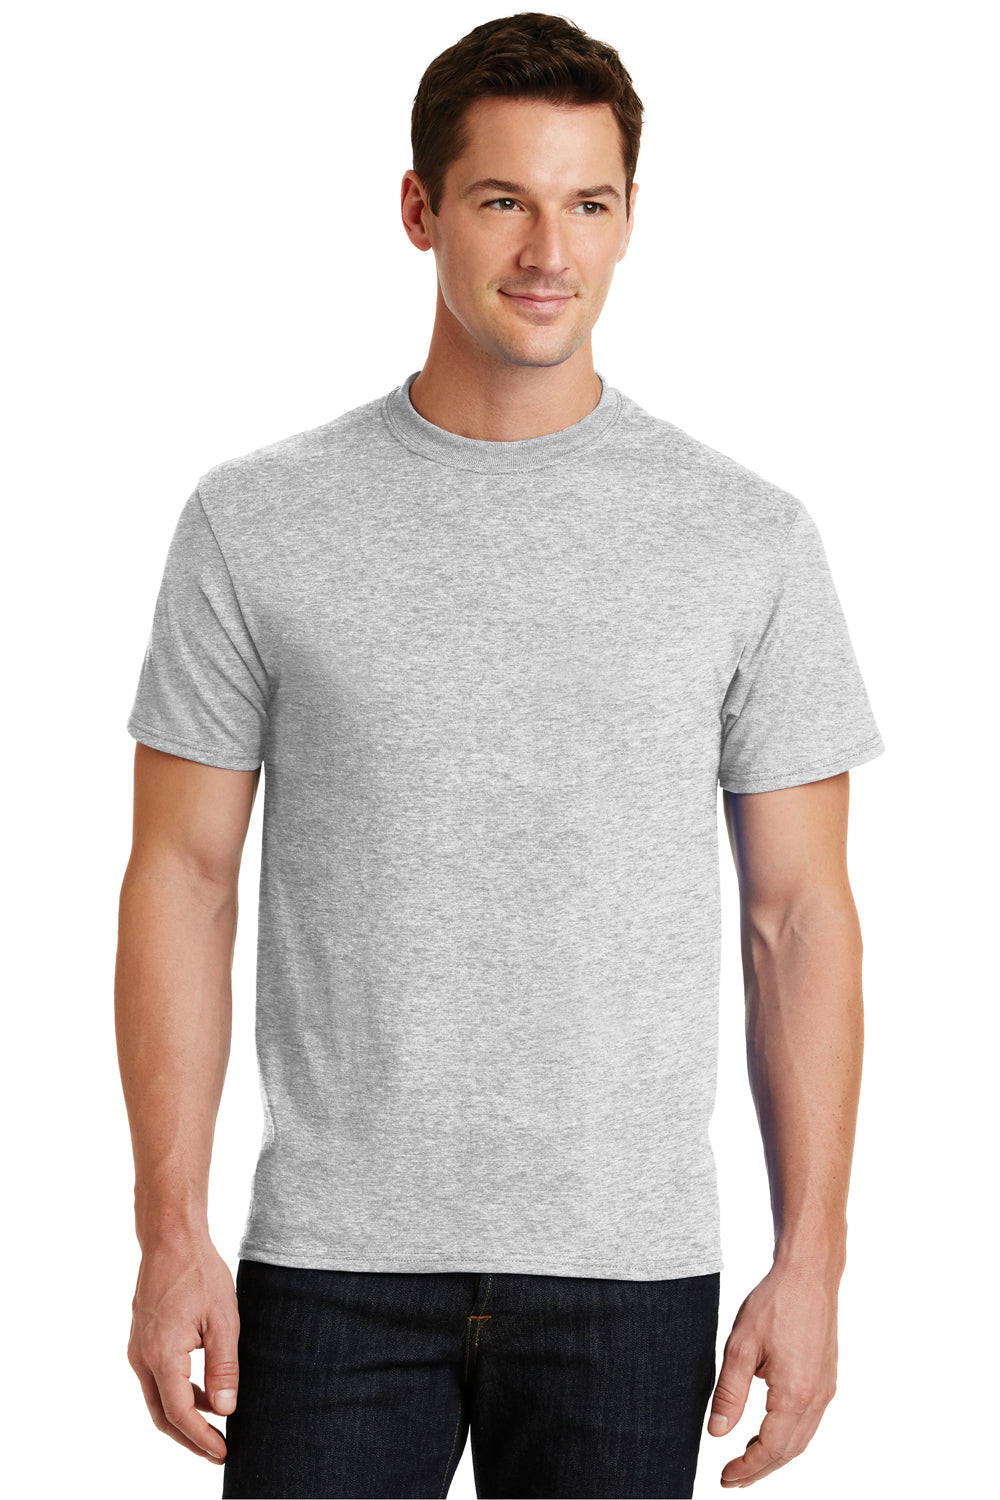 Port & Company PC55 Mens Core Short Sleeve Crewneck T-Shirt Ash Grey Front